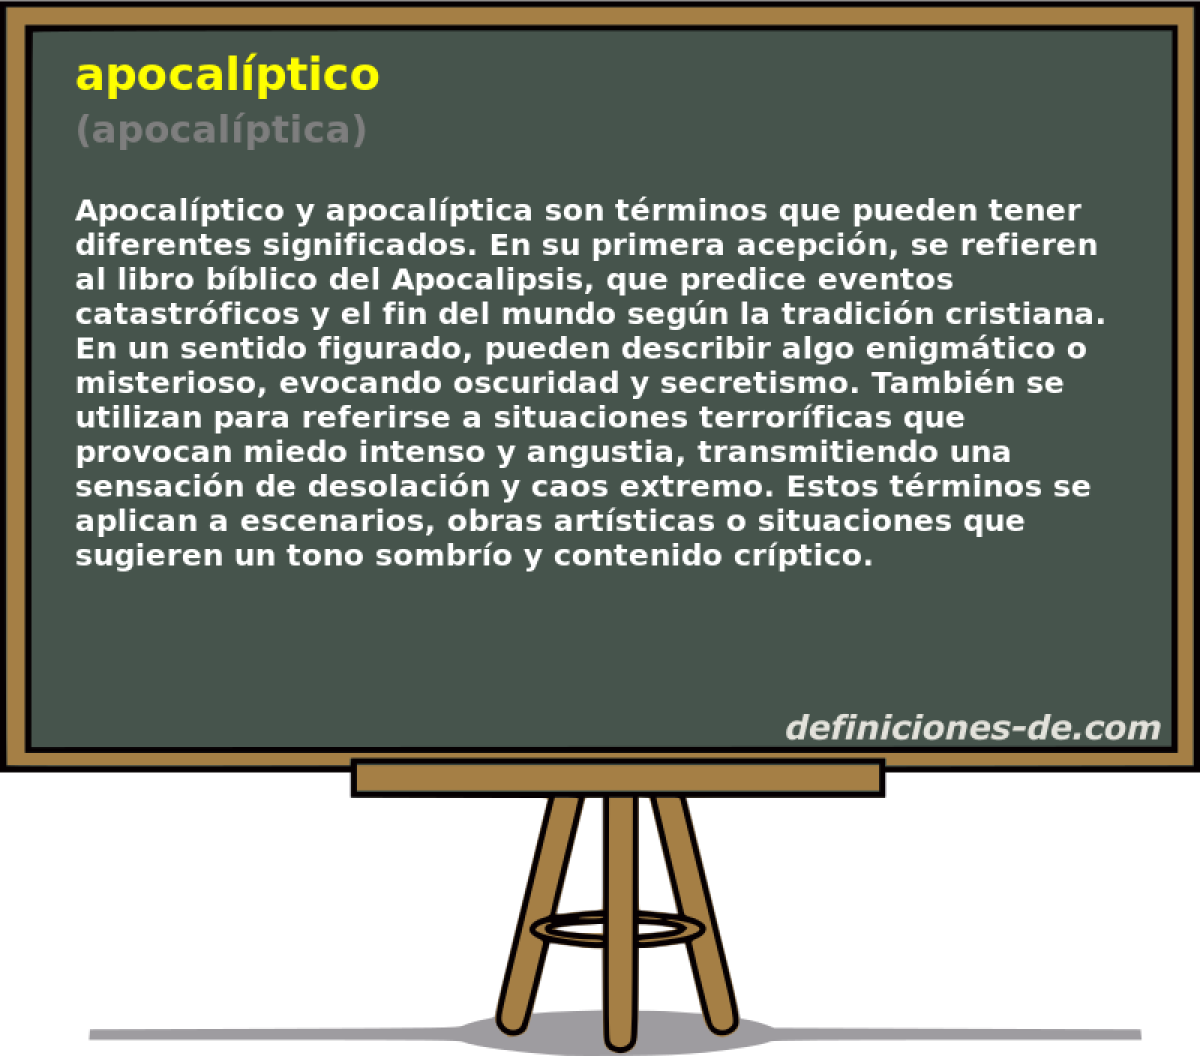 apocalptico (apocalptica)